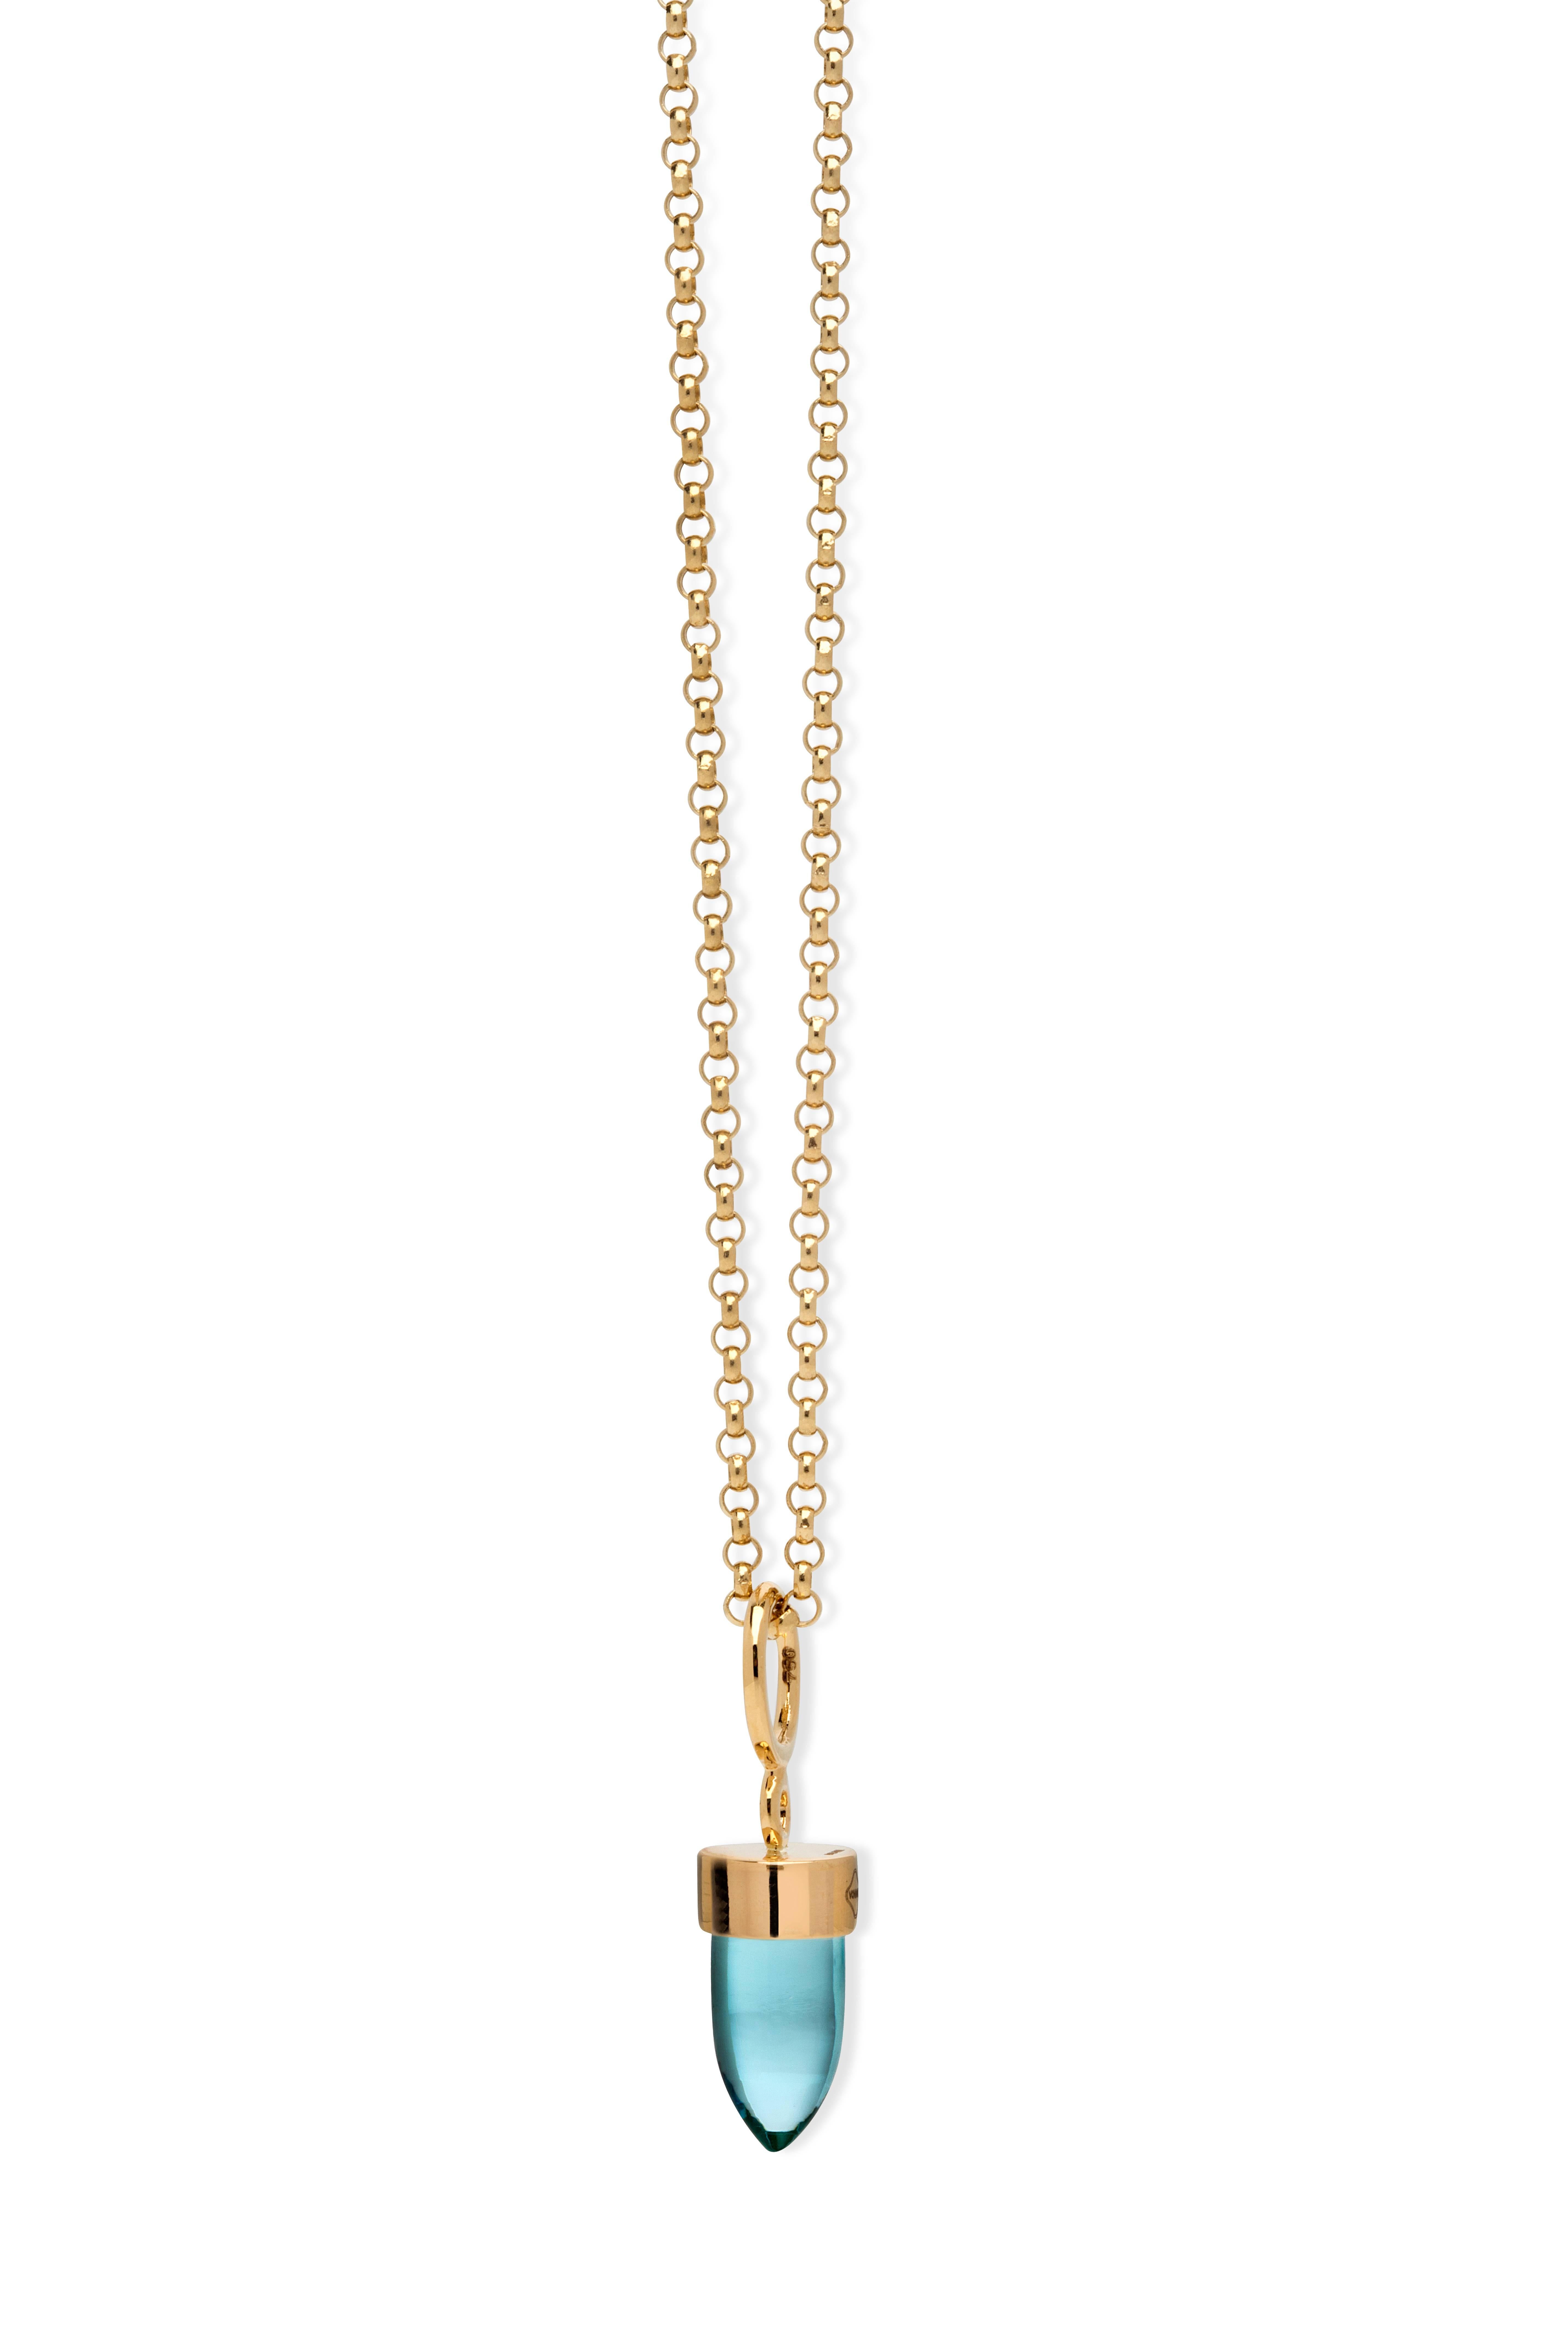 MAVIADA, collier pendentif moderne minimaliste en or 18 carats avec améthyste violette Unisexe en vente